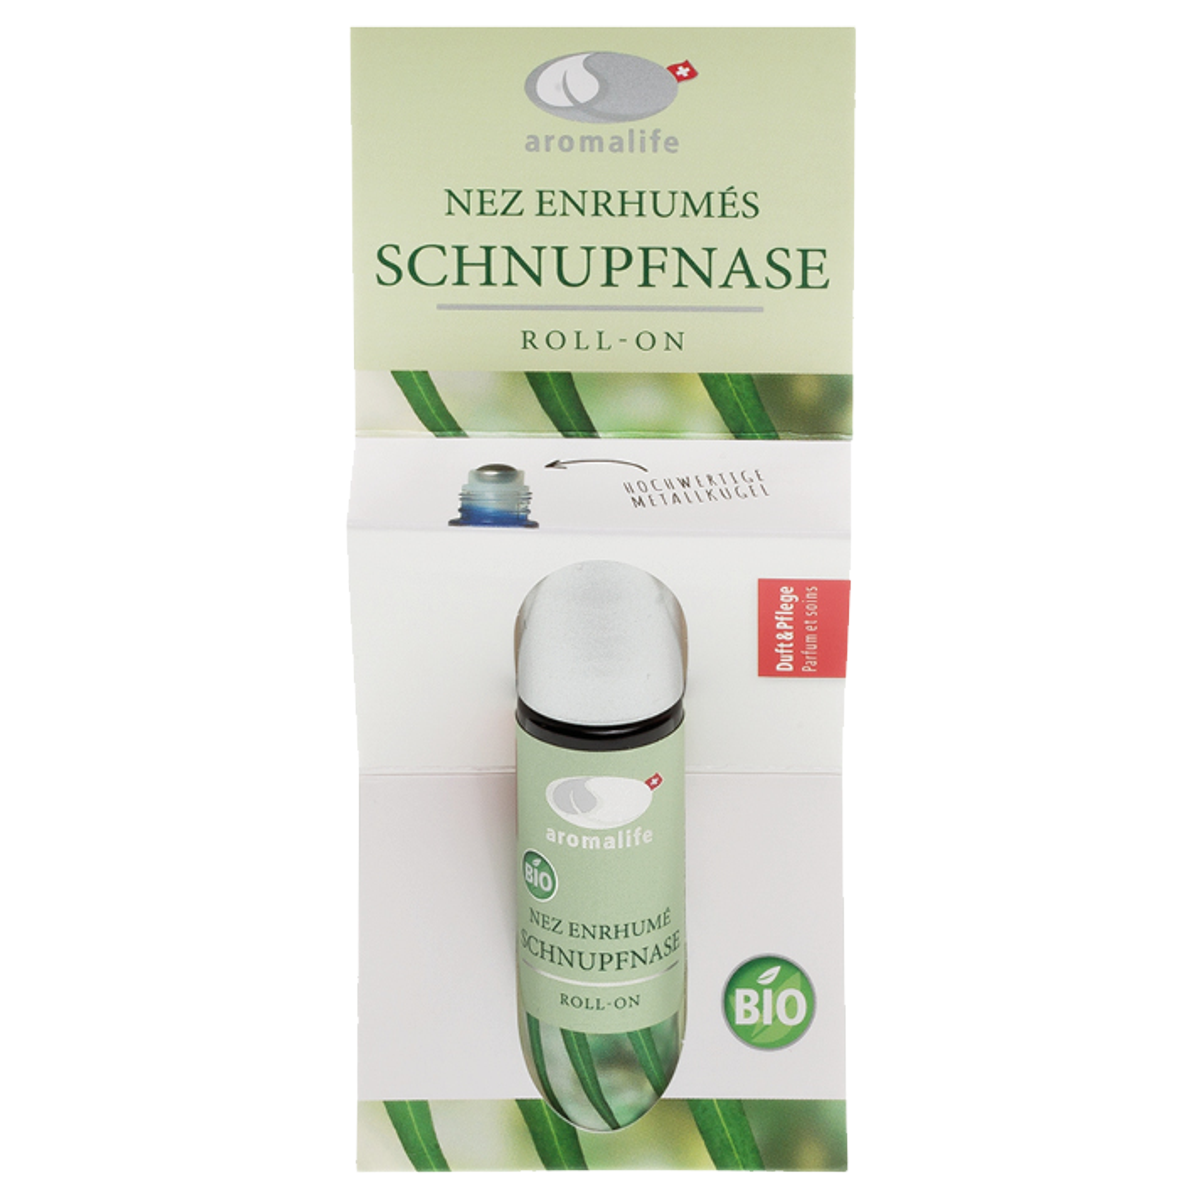 Aromalife Schnupfnase Roll-on 10 ml